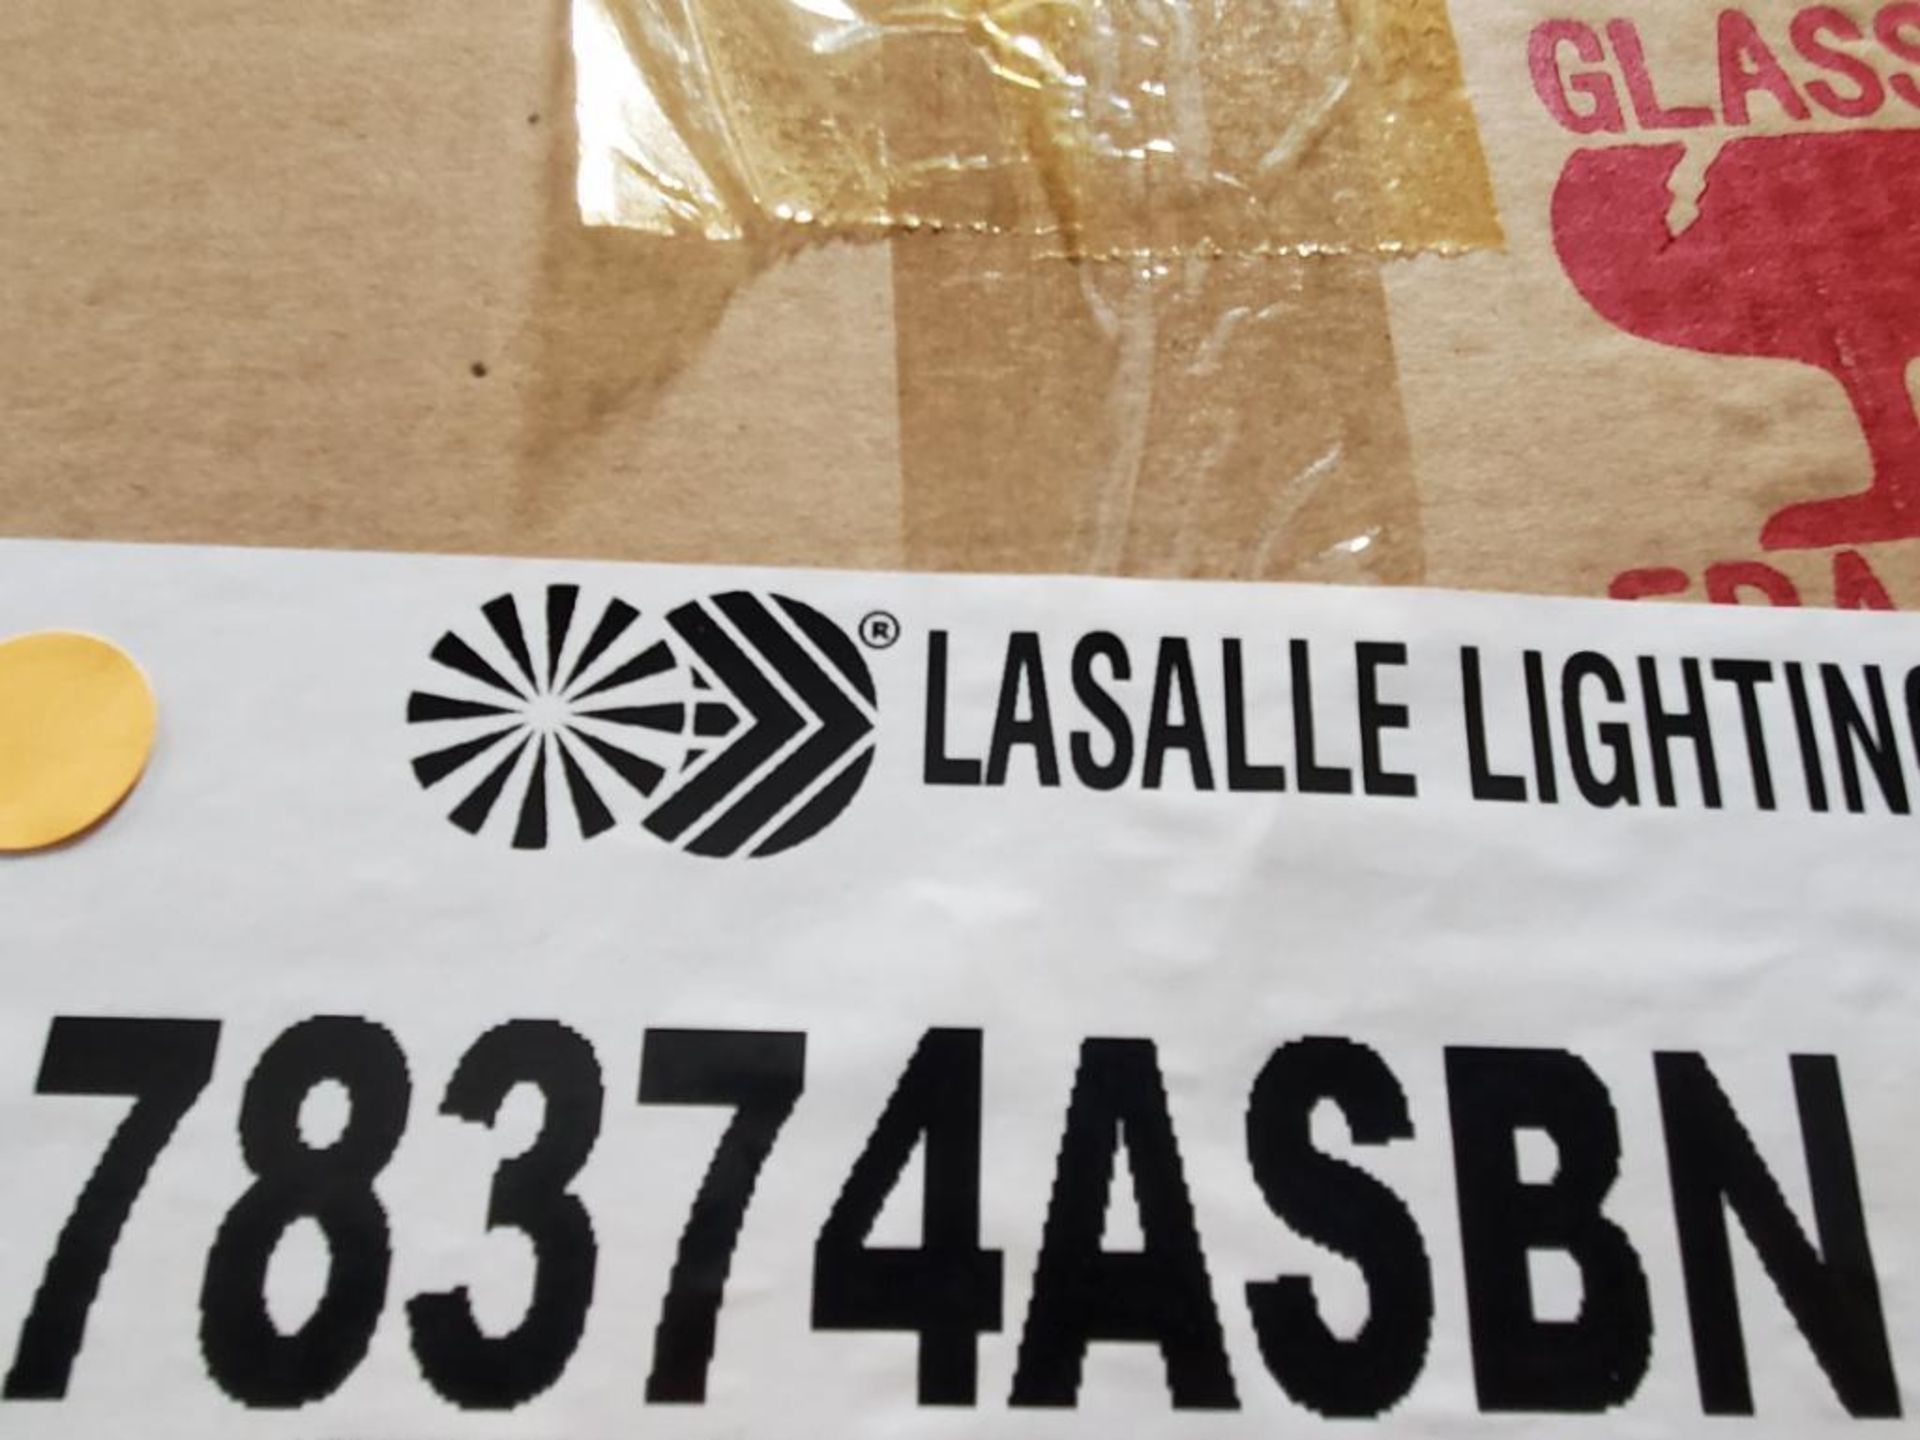 Qty 192 - LaSalle 12 volt 2-bulb light. Part # 78374-AS-BN. New in bulk box. - Image 10 of 10